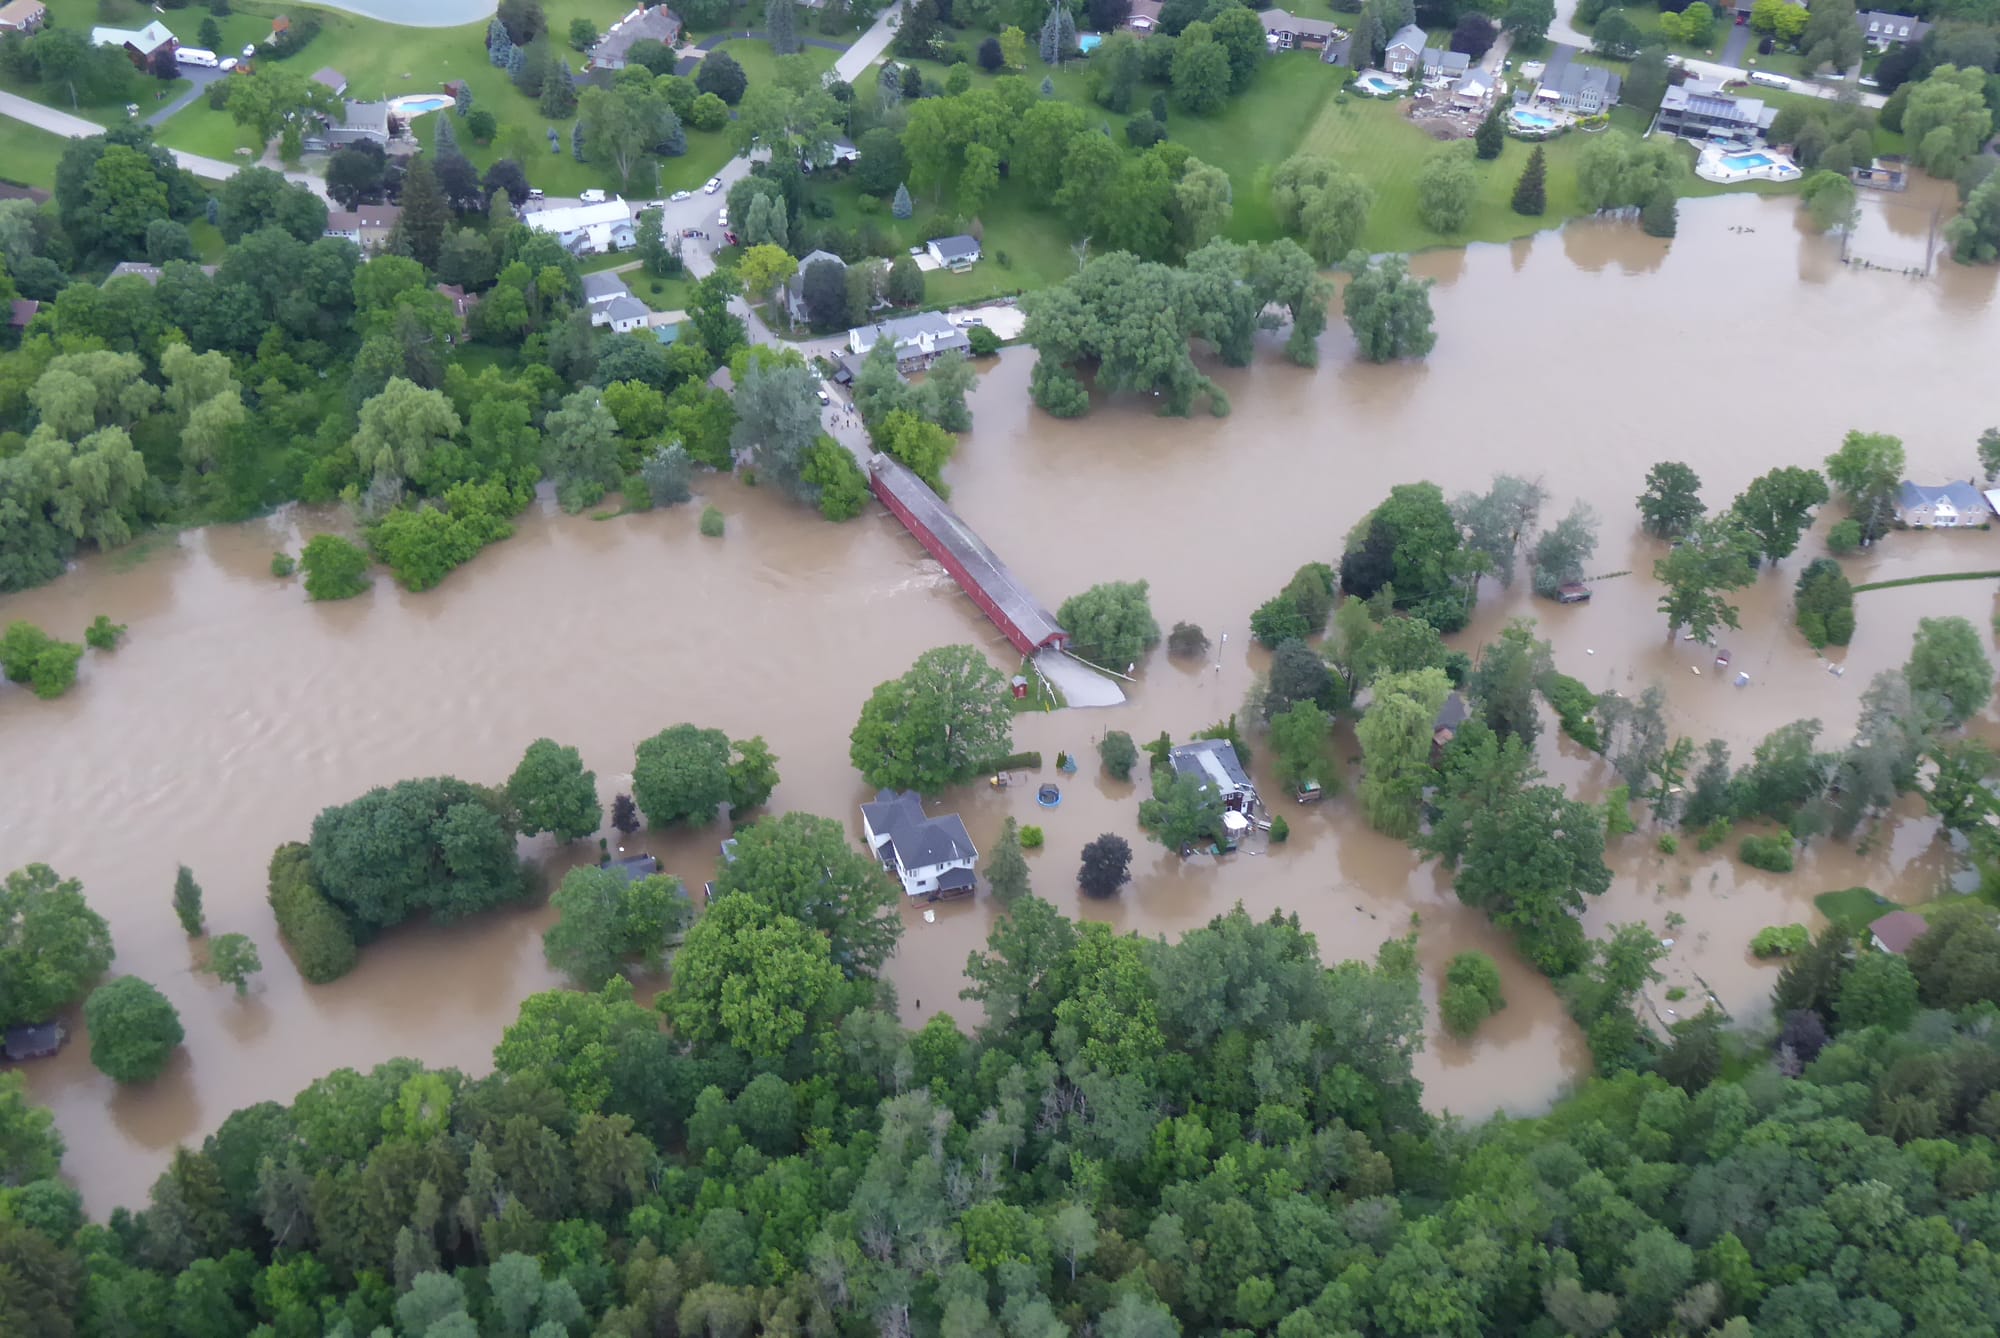 UW-developed tool helps municipalities assess flood risks, evaluates preparations